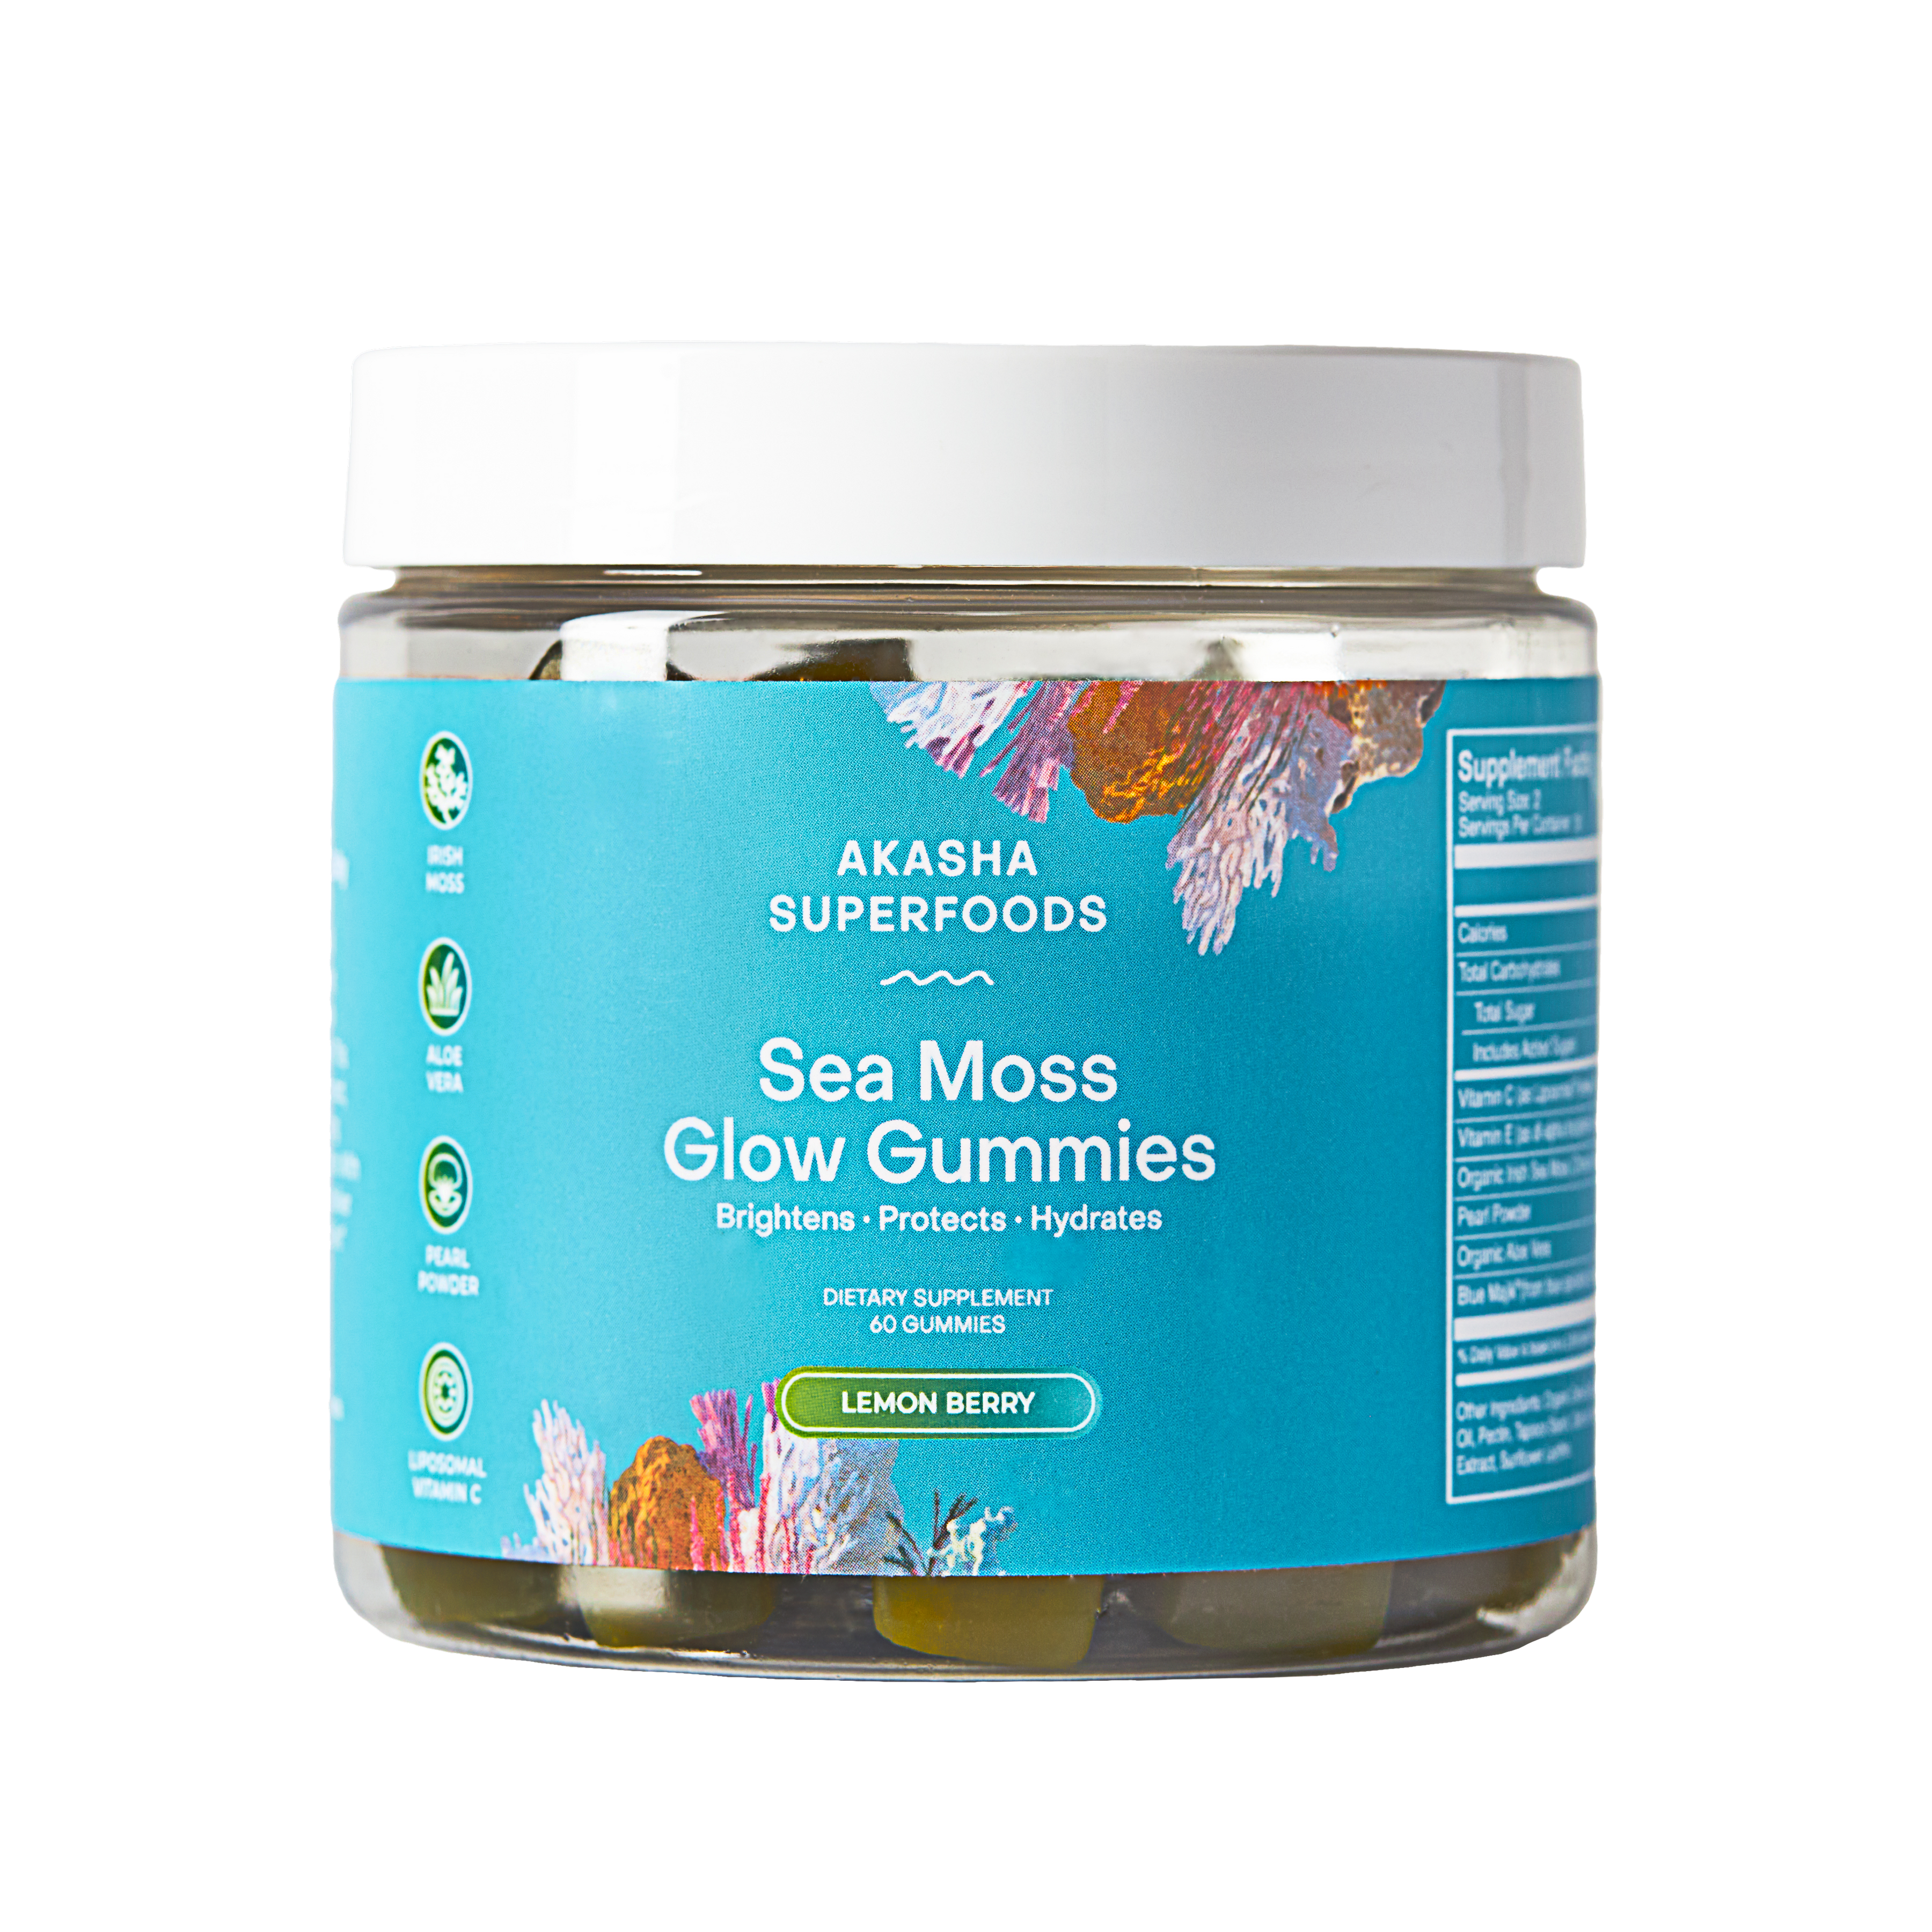 Sea Moss Glow Gummies